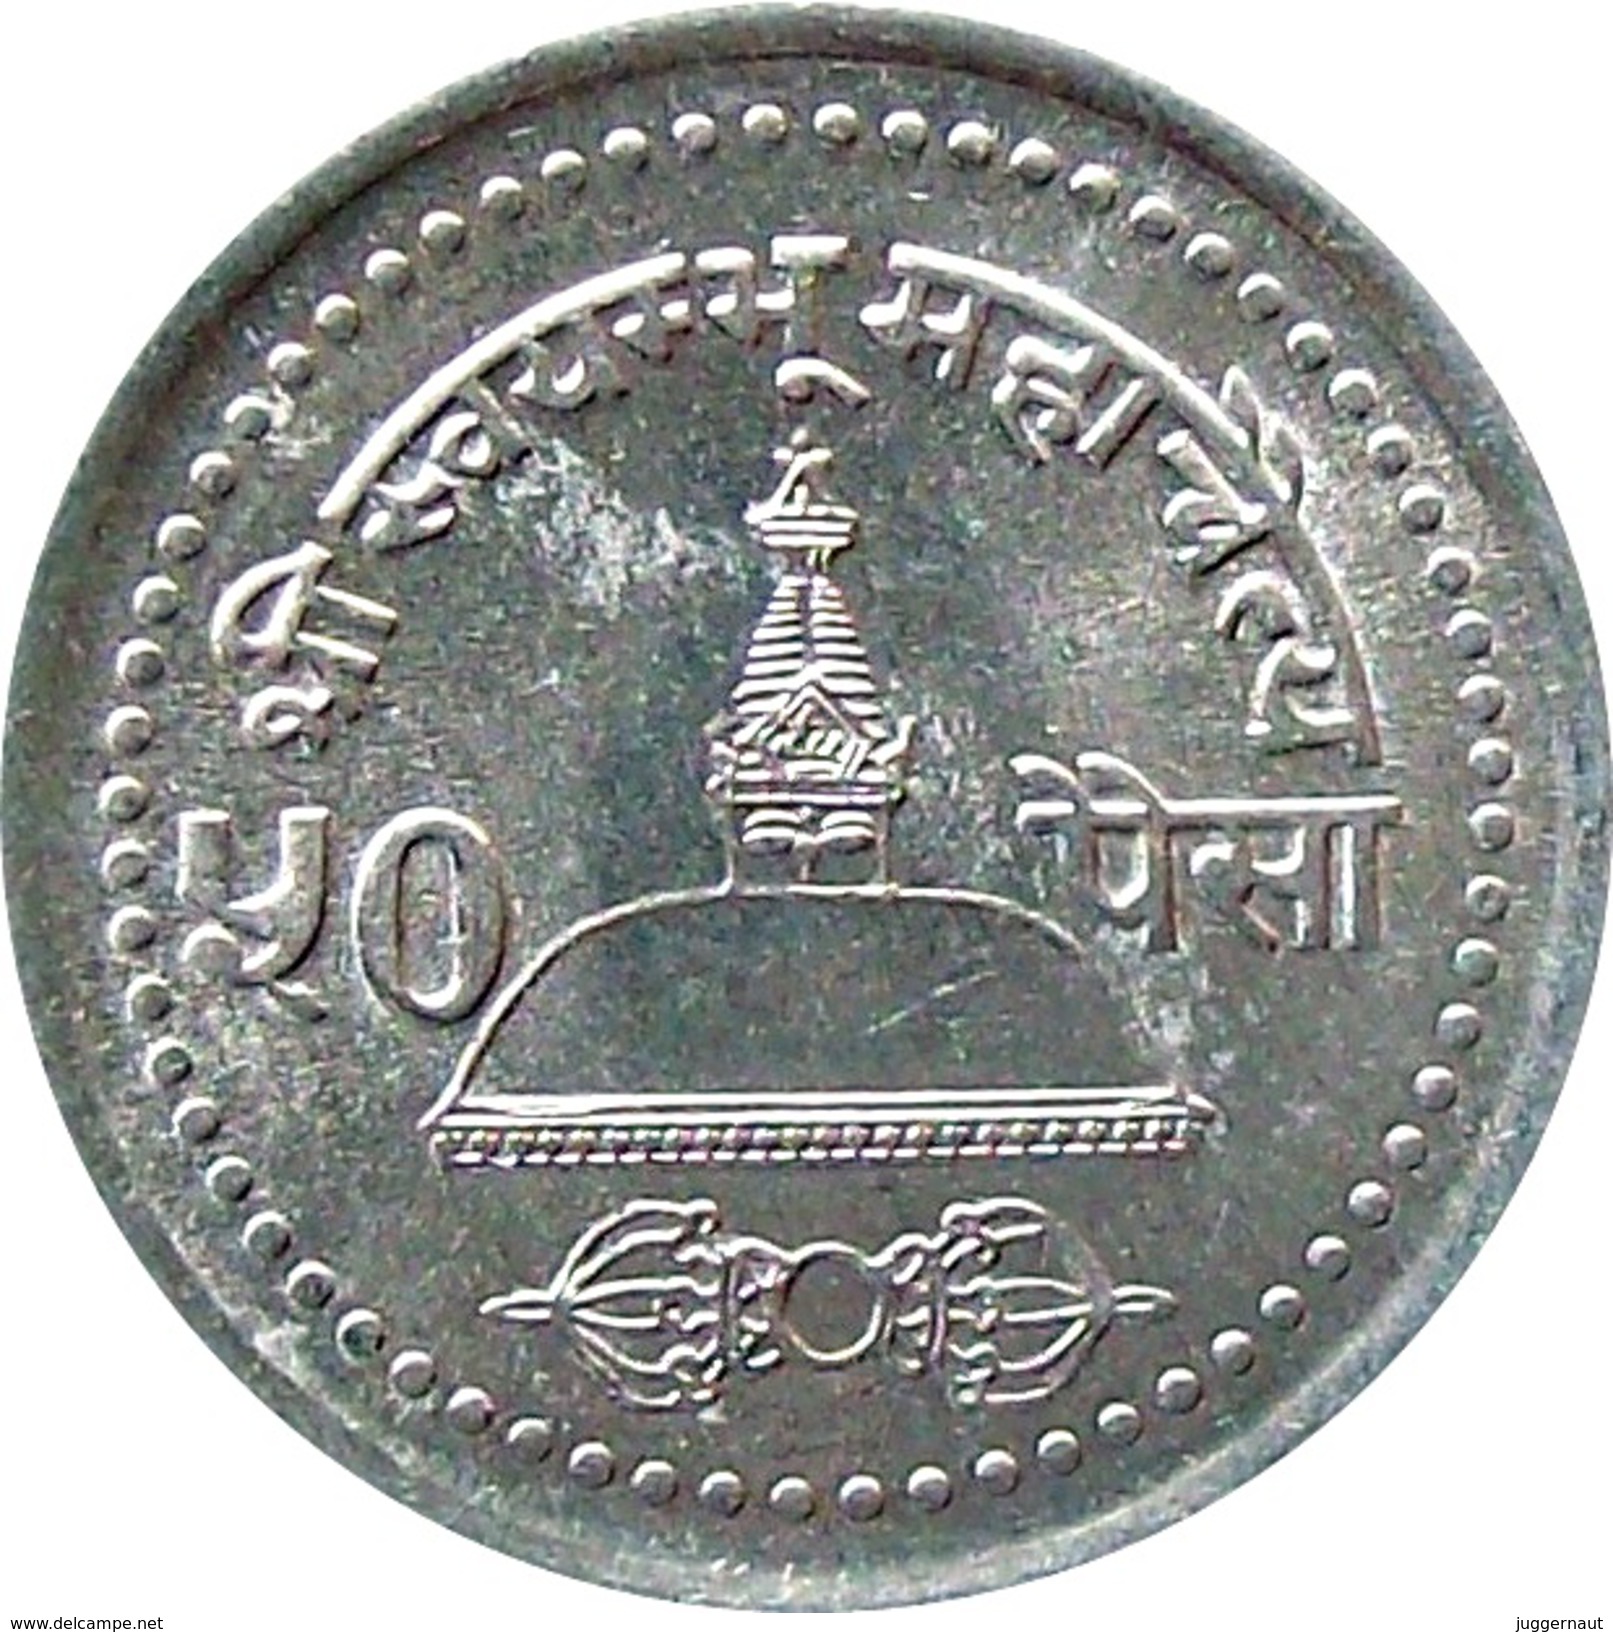 NEPAL 50 PAISA SWAYAMBHUNATH TEMPLE ALUMINUM COIN NEPAL 2002 KM-1149 UNCIRCULATED UNC - Népal